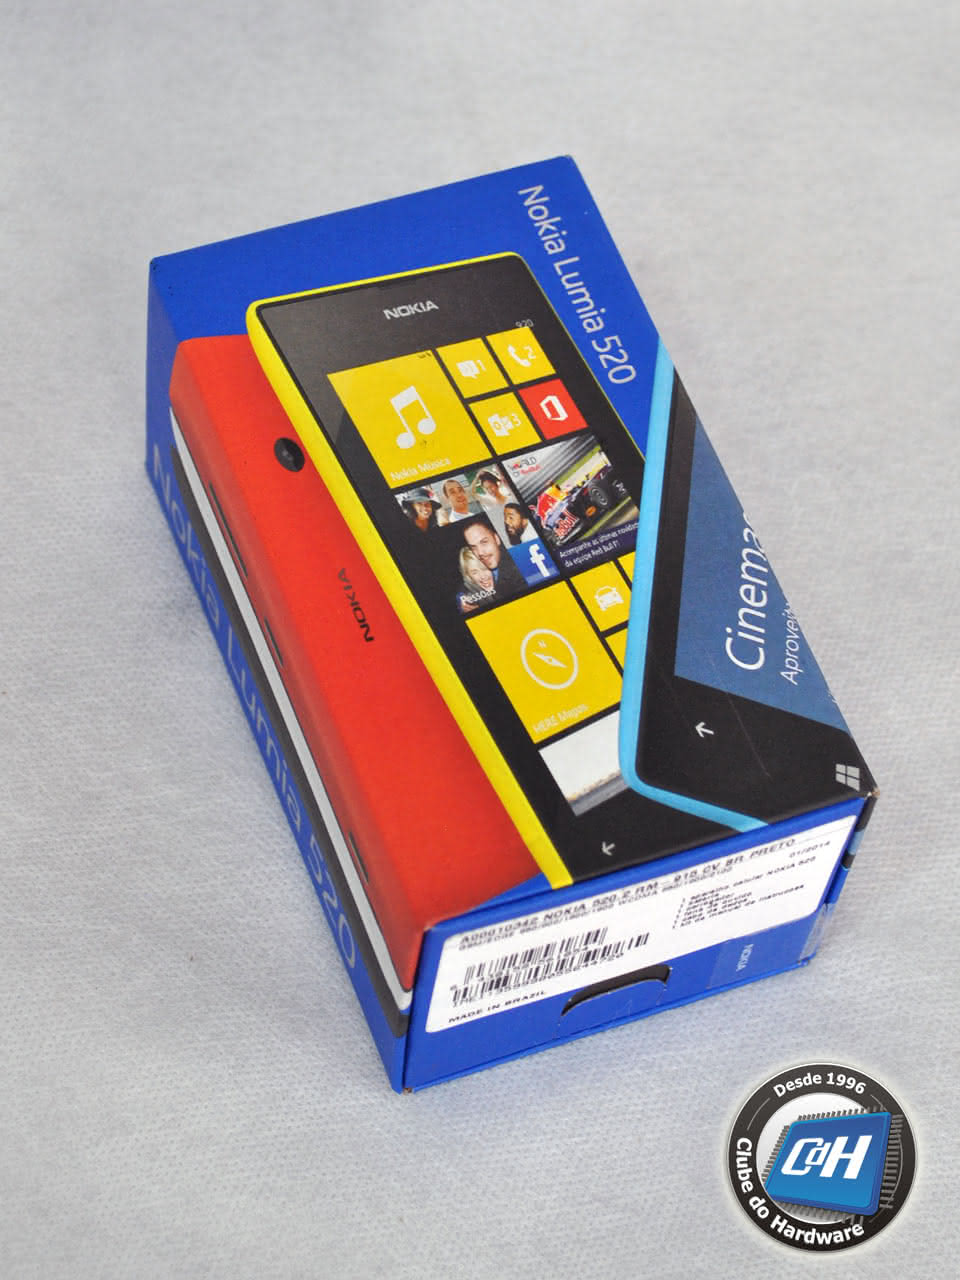 Teste do smartphone Nokia Lumia 520